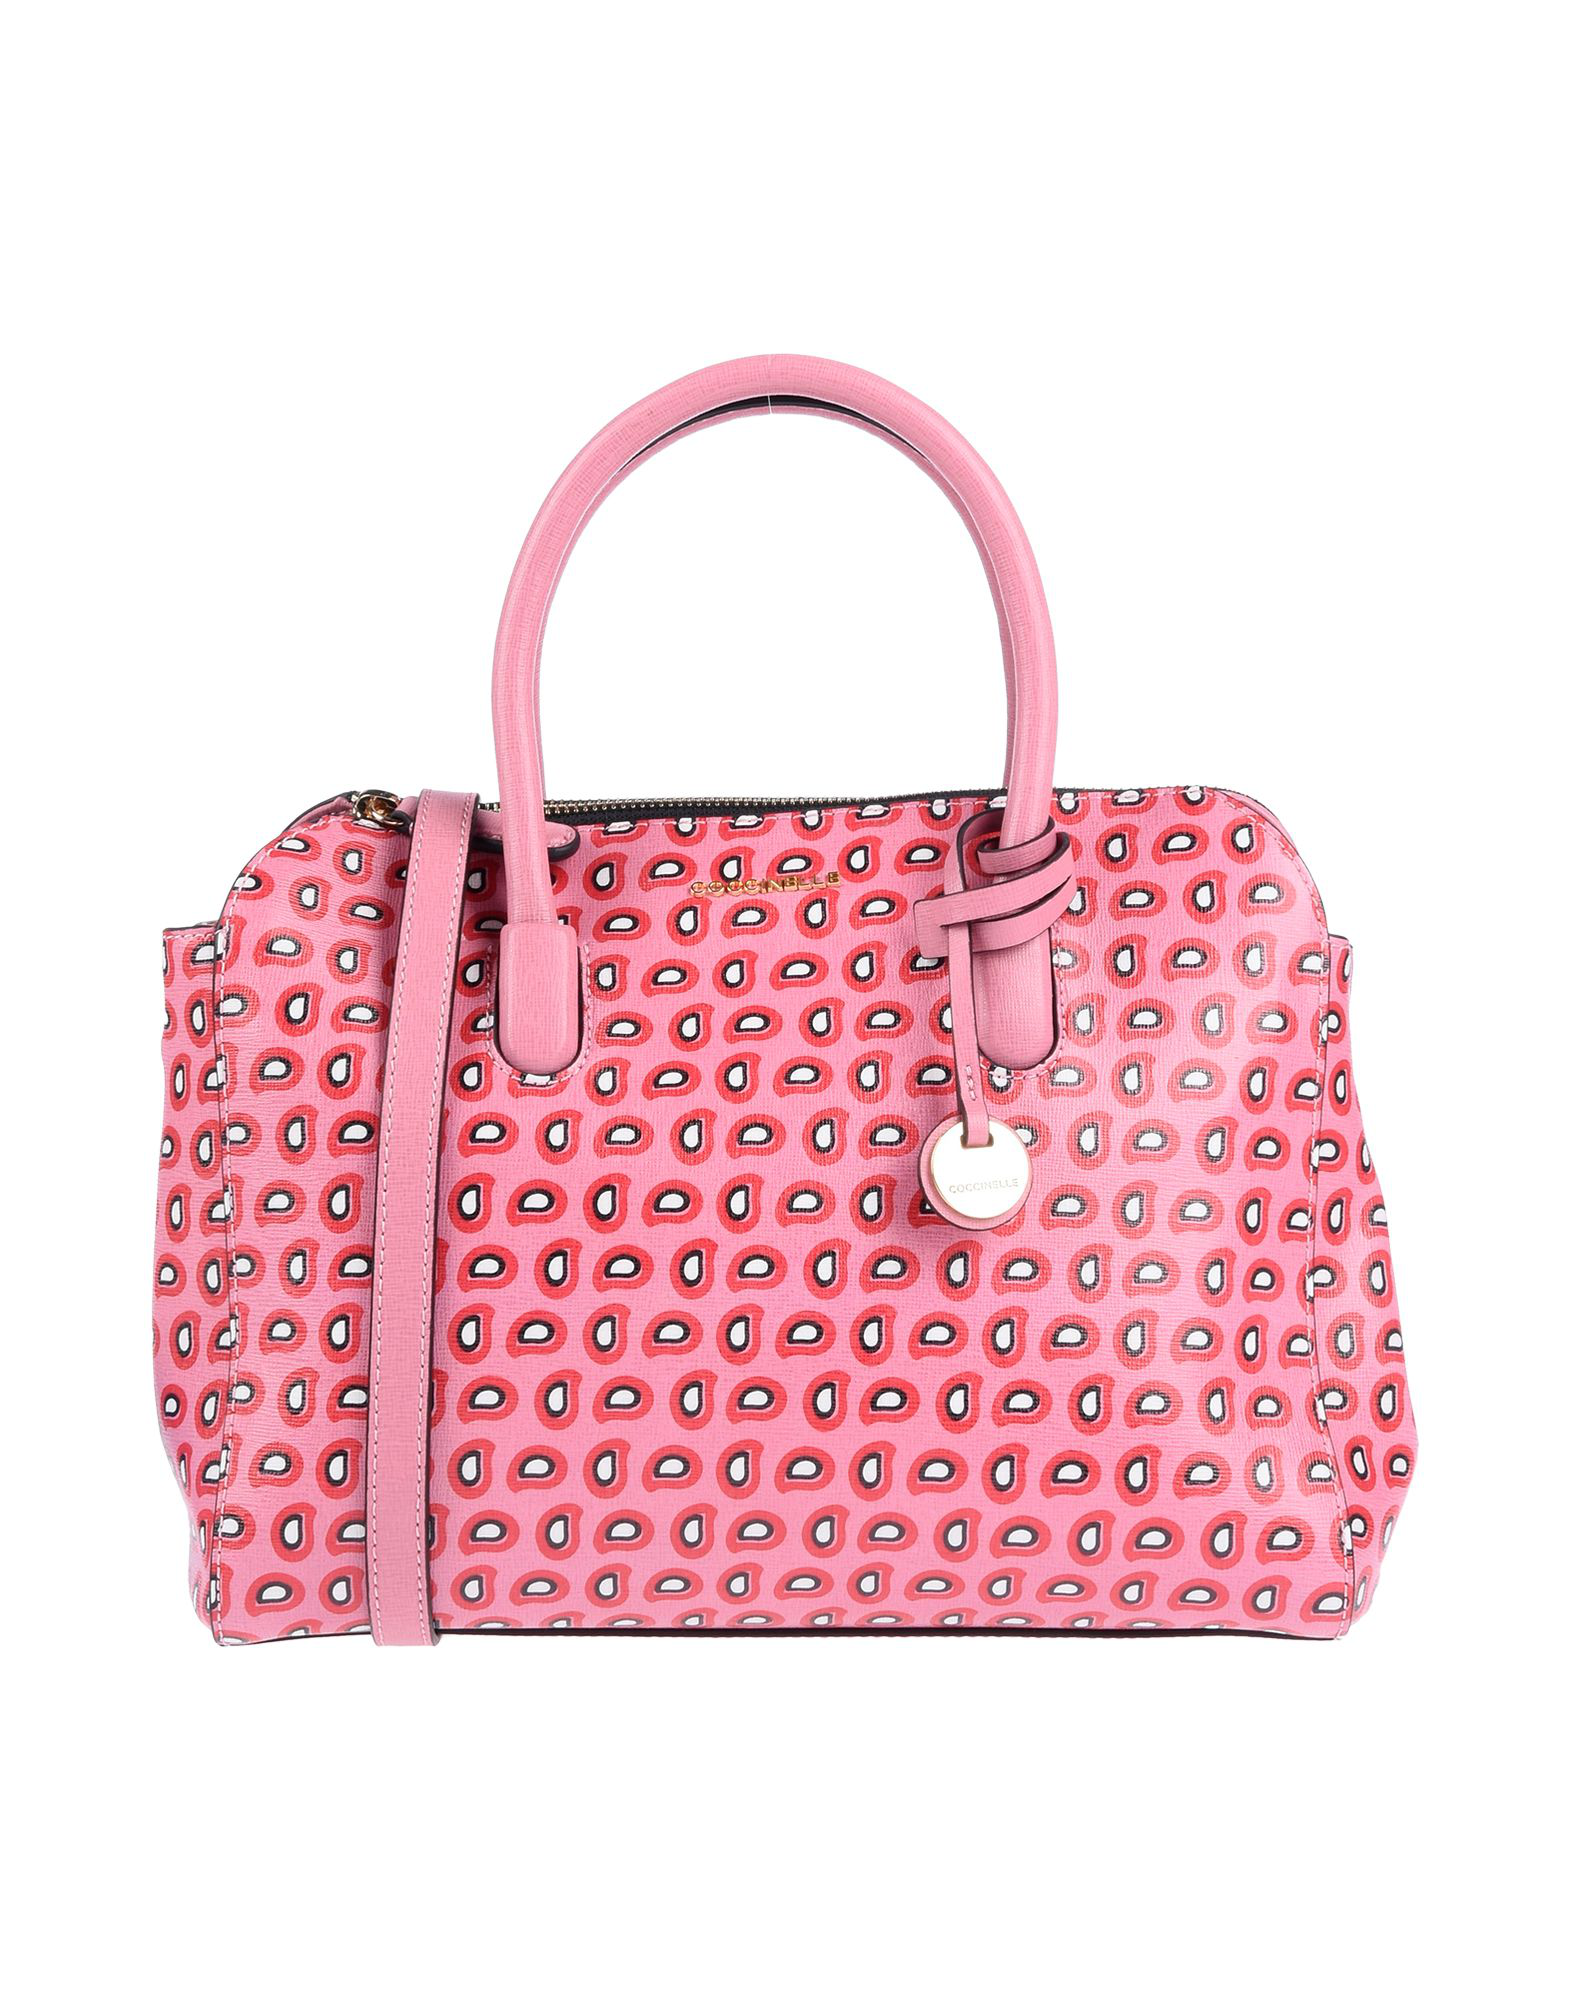 Coccinelle Handbag In Pastel Pink | ModeSens